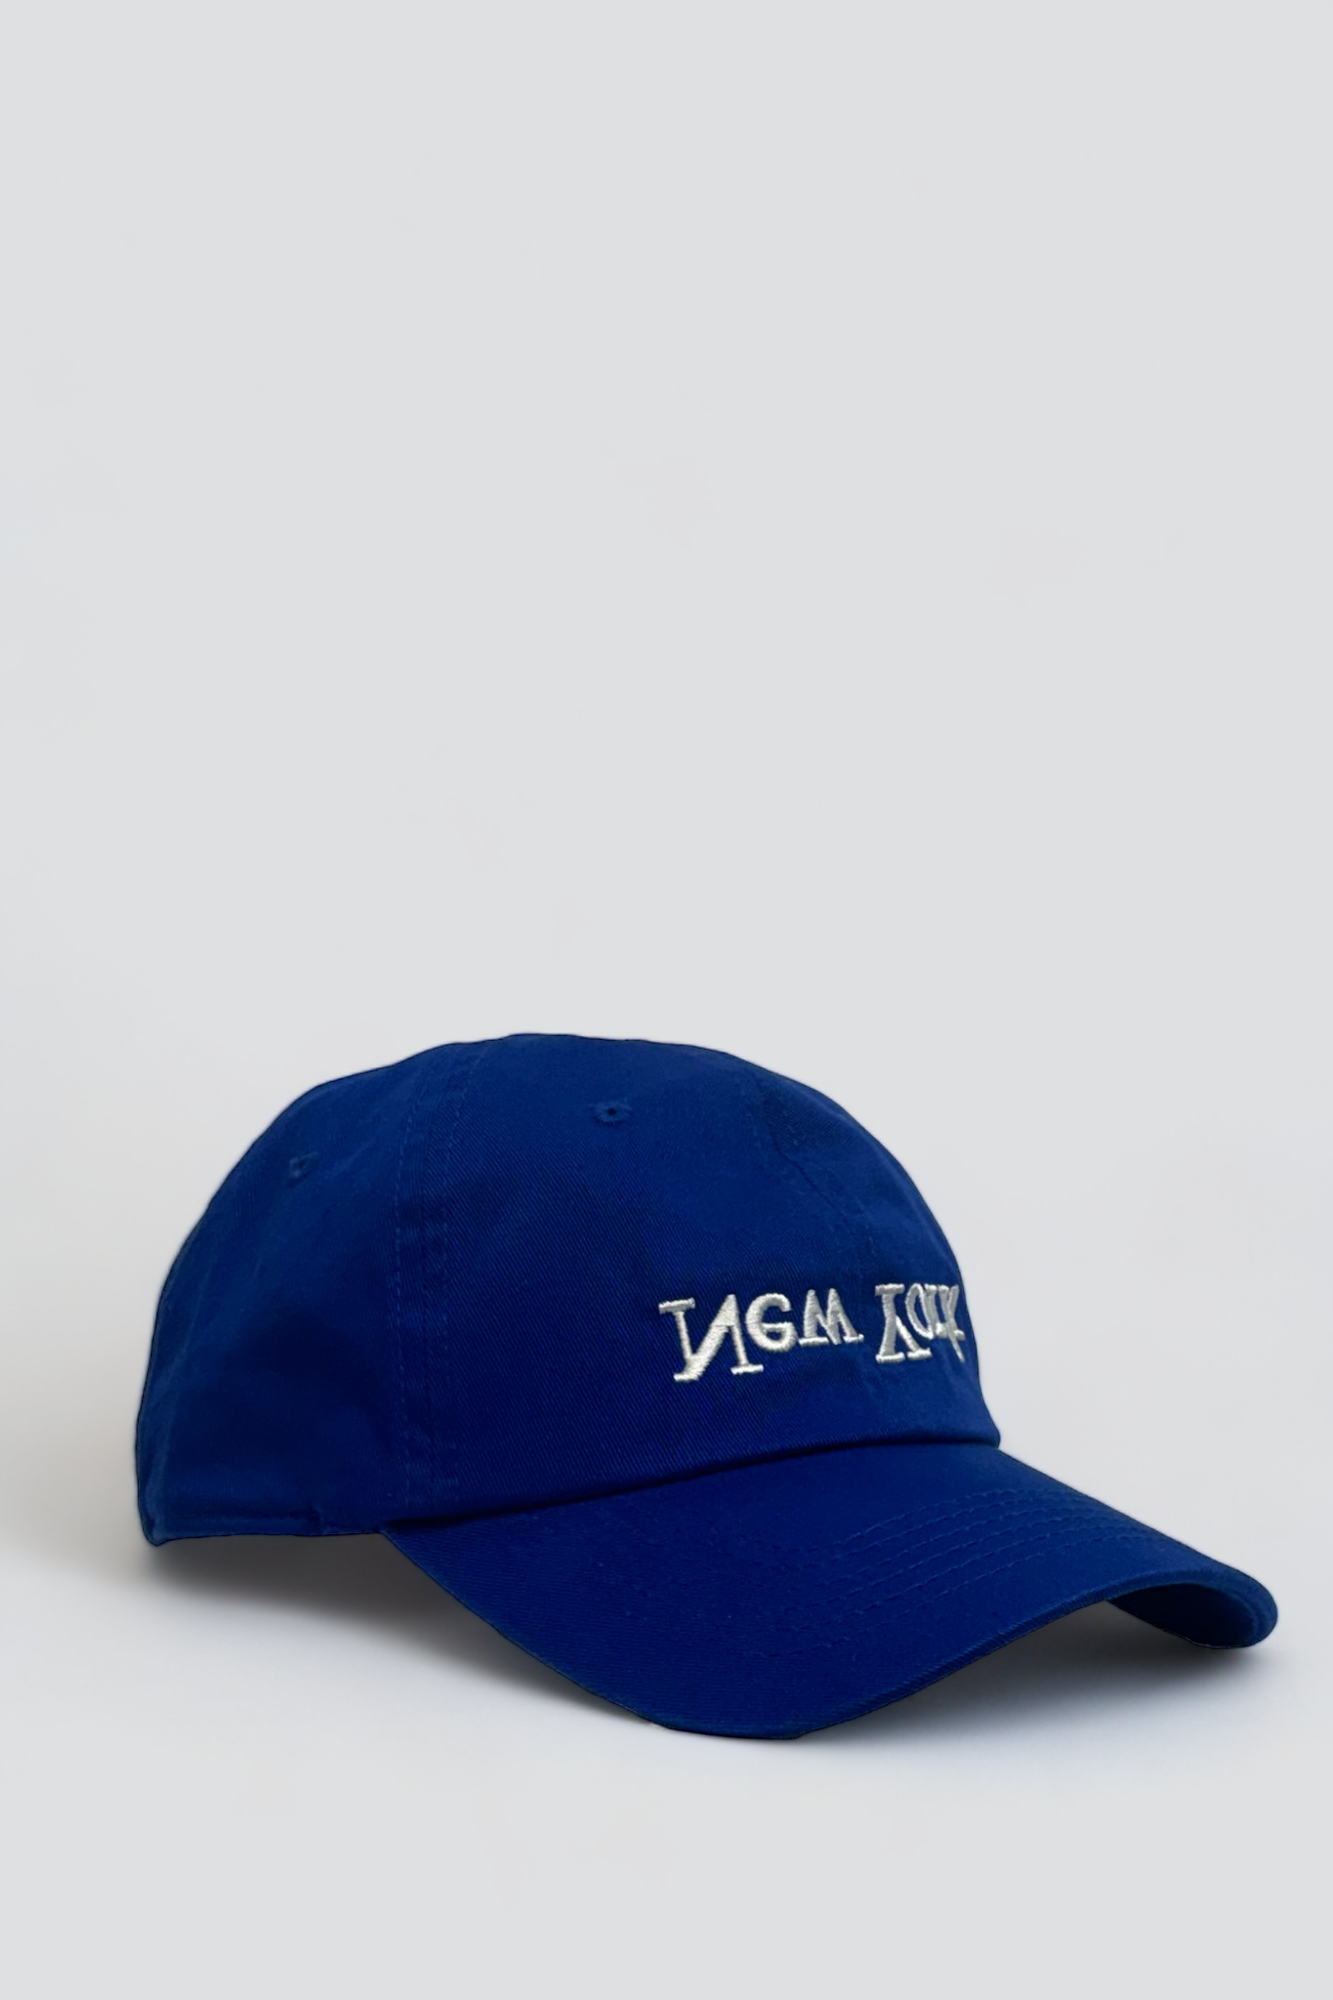 New York Embroidered Hat - Cobalt Blue/White